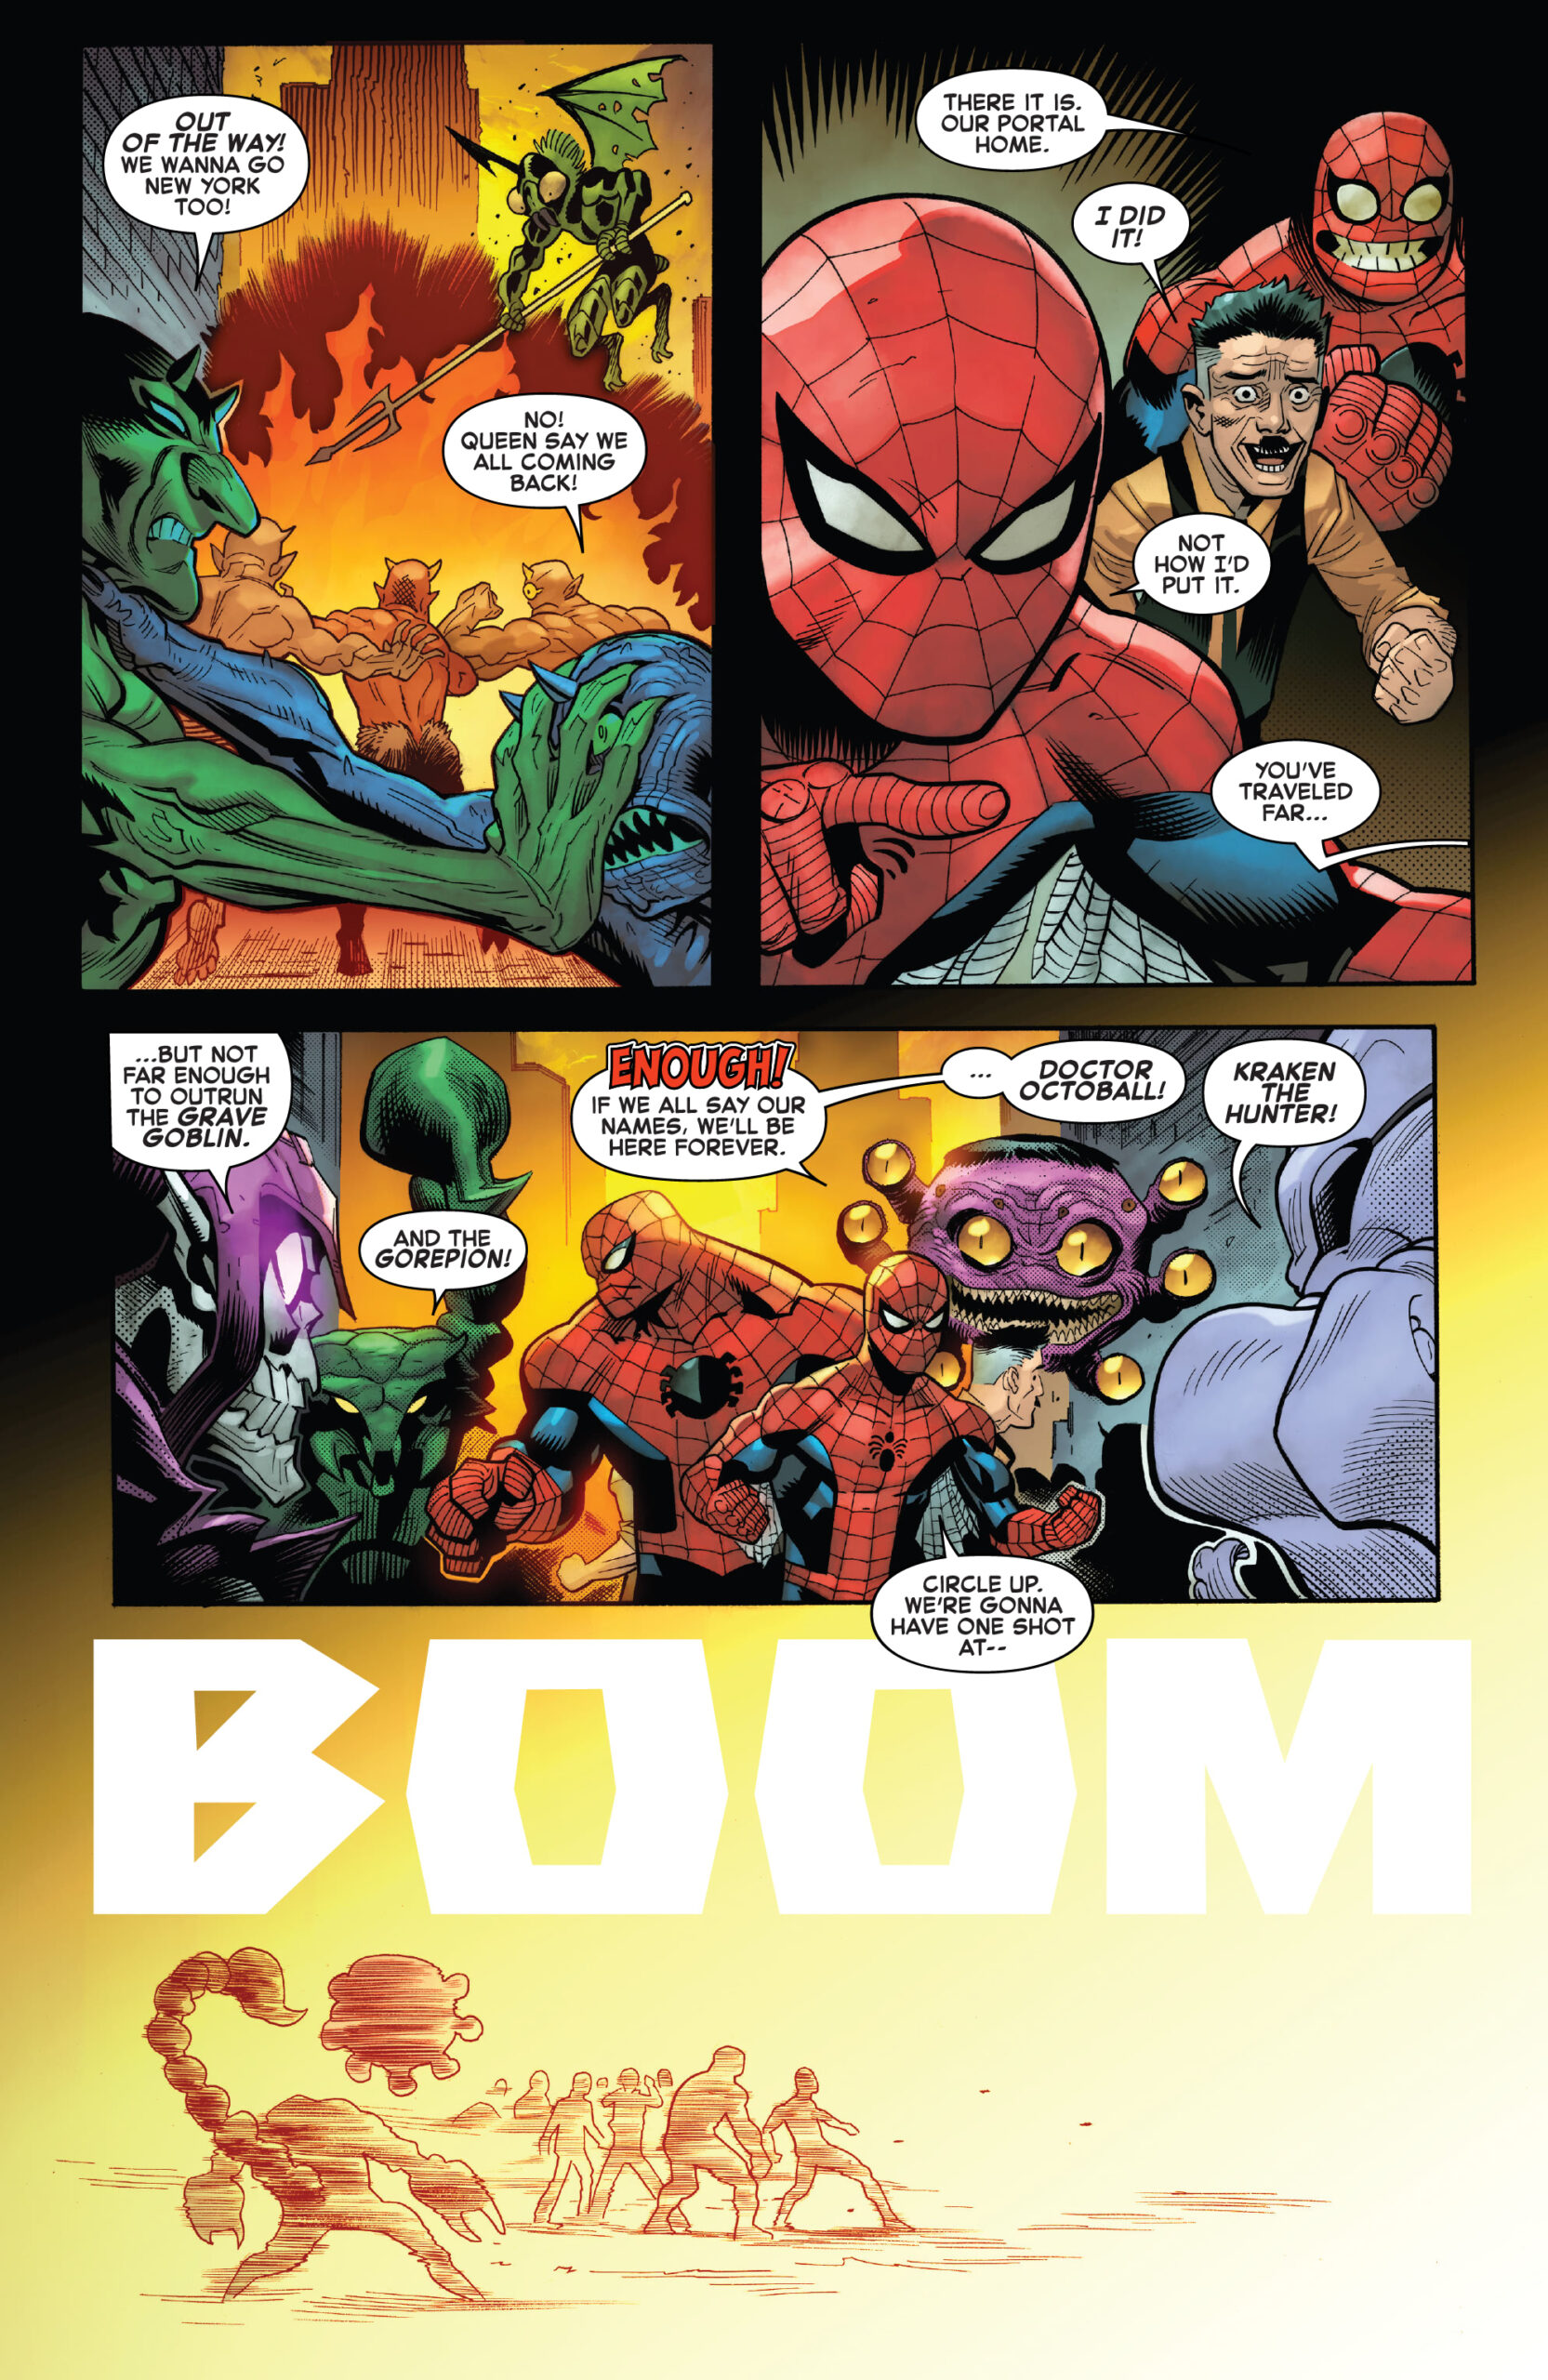 Amazing Spider-Man #18 spoilers 7